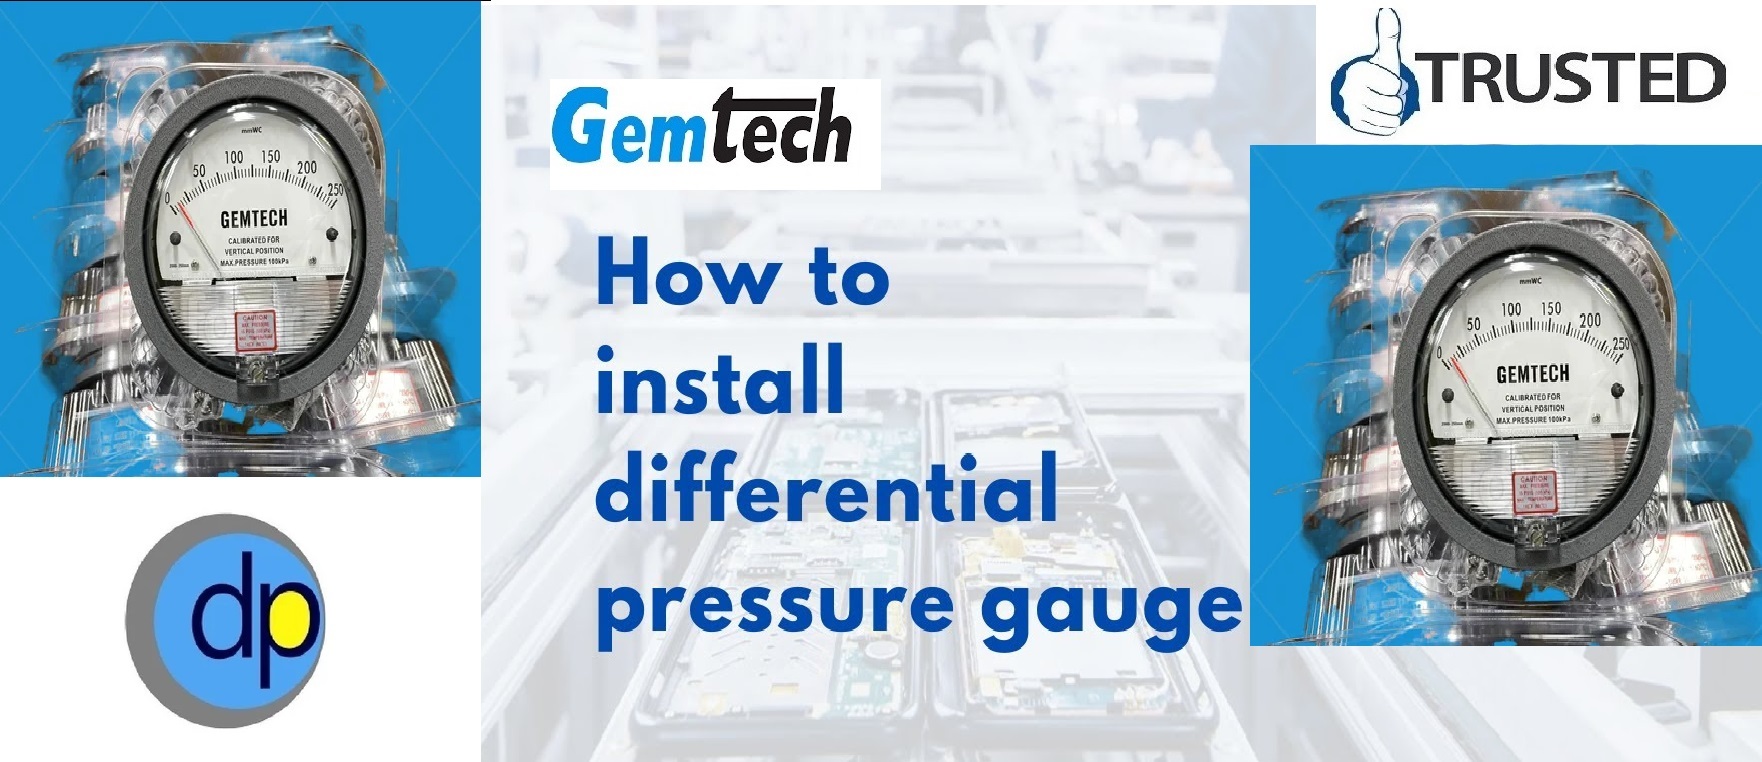 Model G2300-15 CM - Gemtech Differential pressure Gauges Range 0-15 CM wc